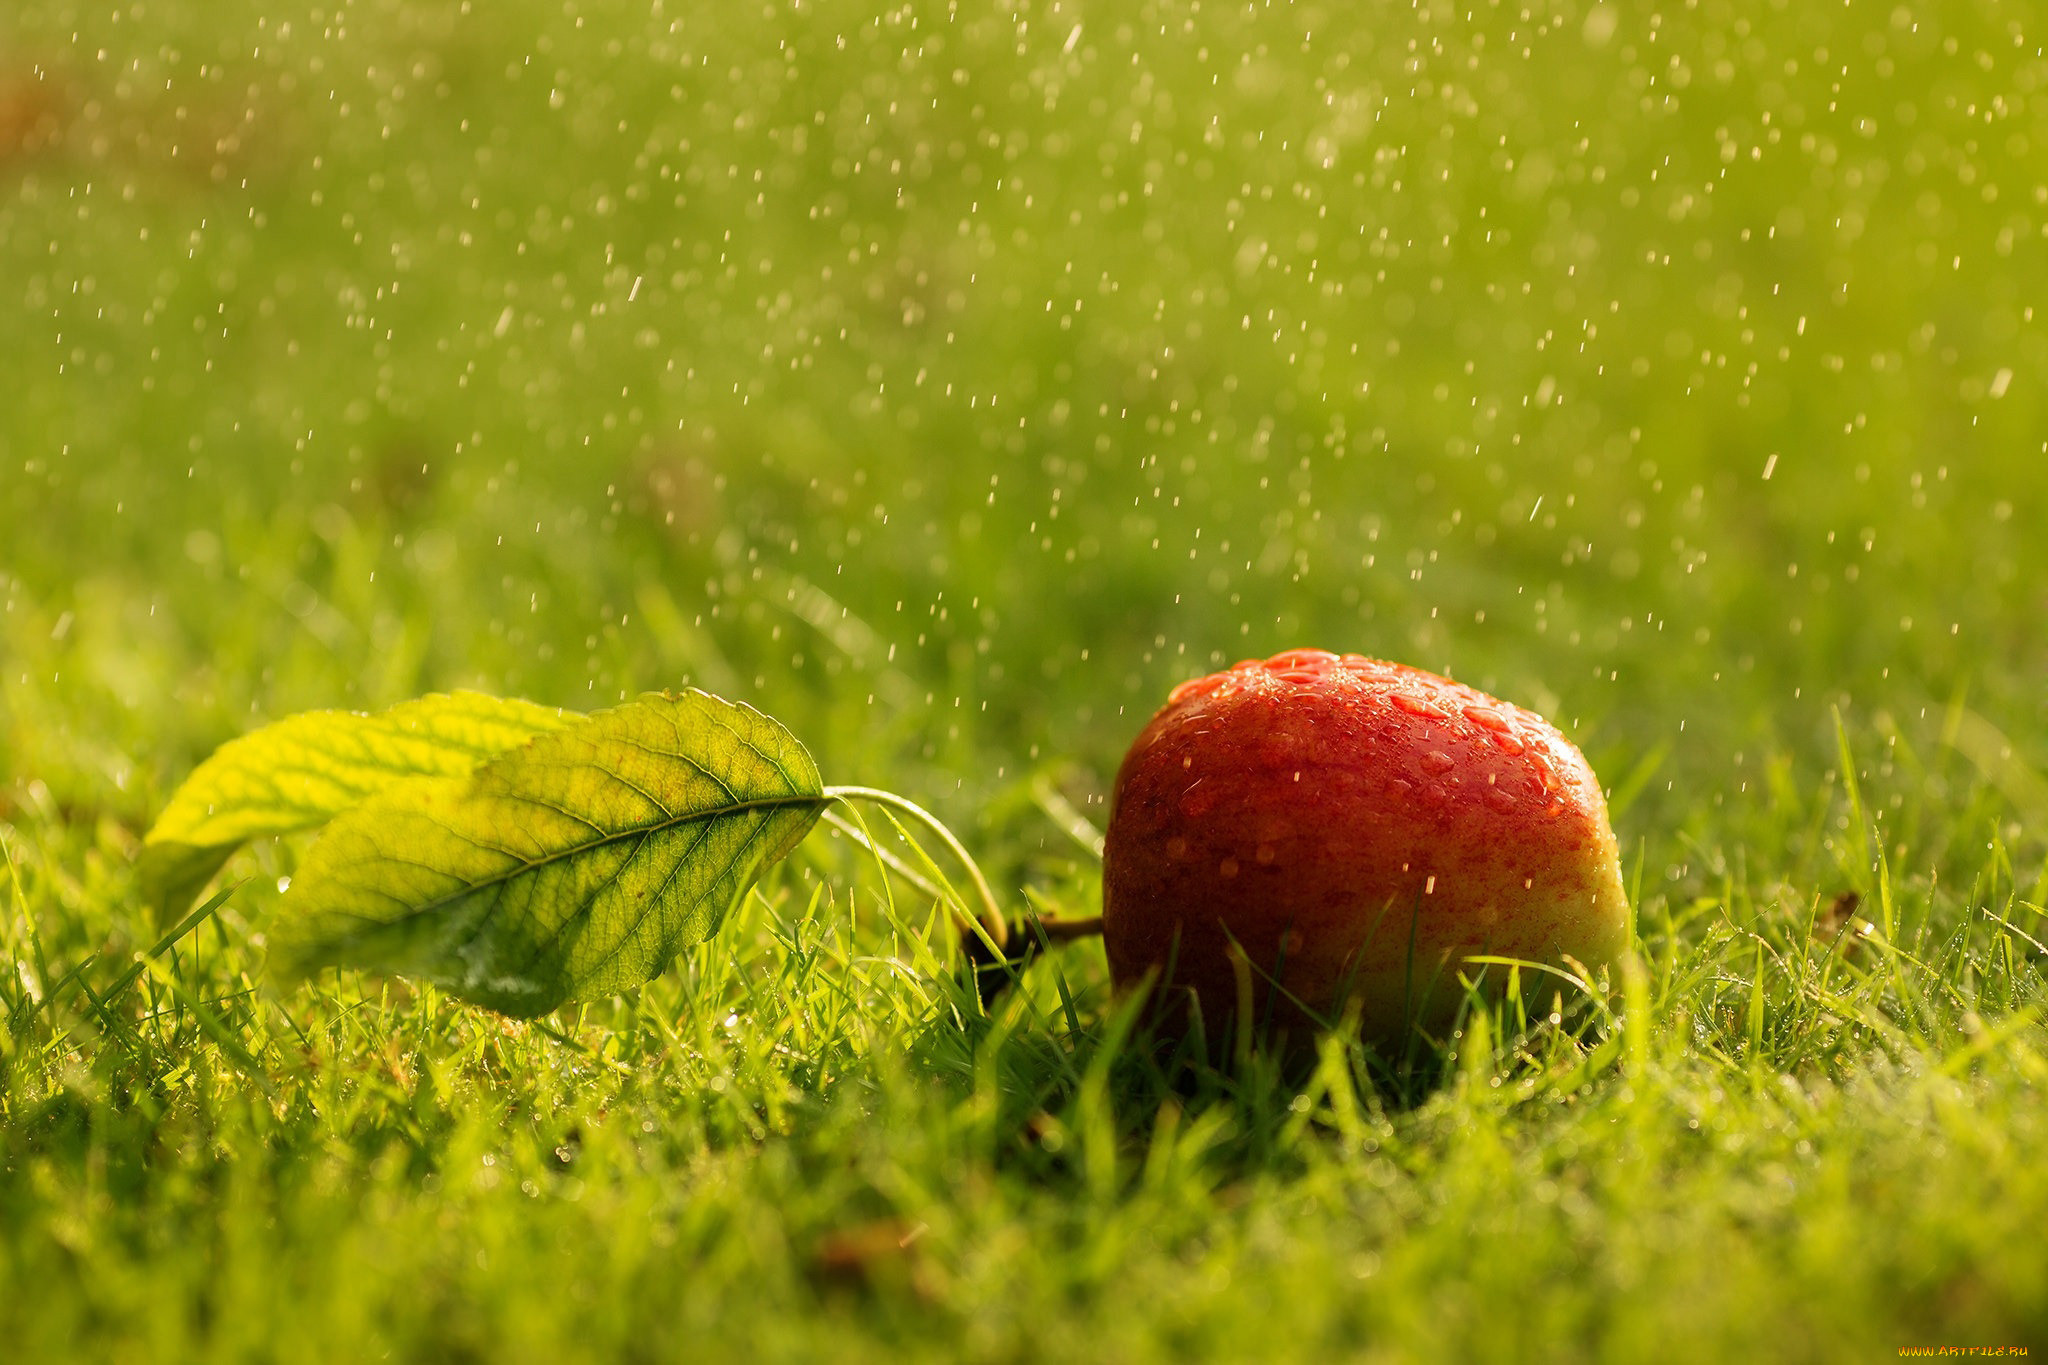 Фруктовая трава. Яблоки на траве. Лето август. Яблоки на траве фон. Сочные ягоды на траве.